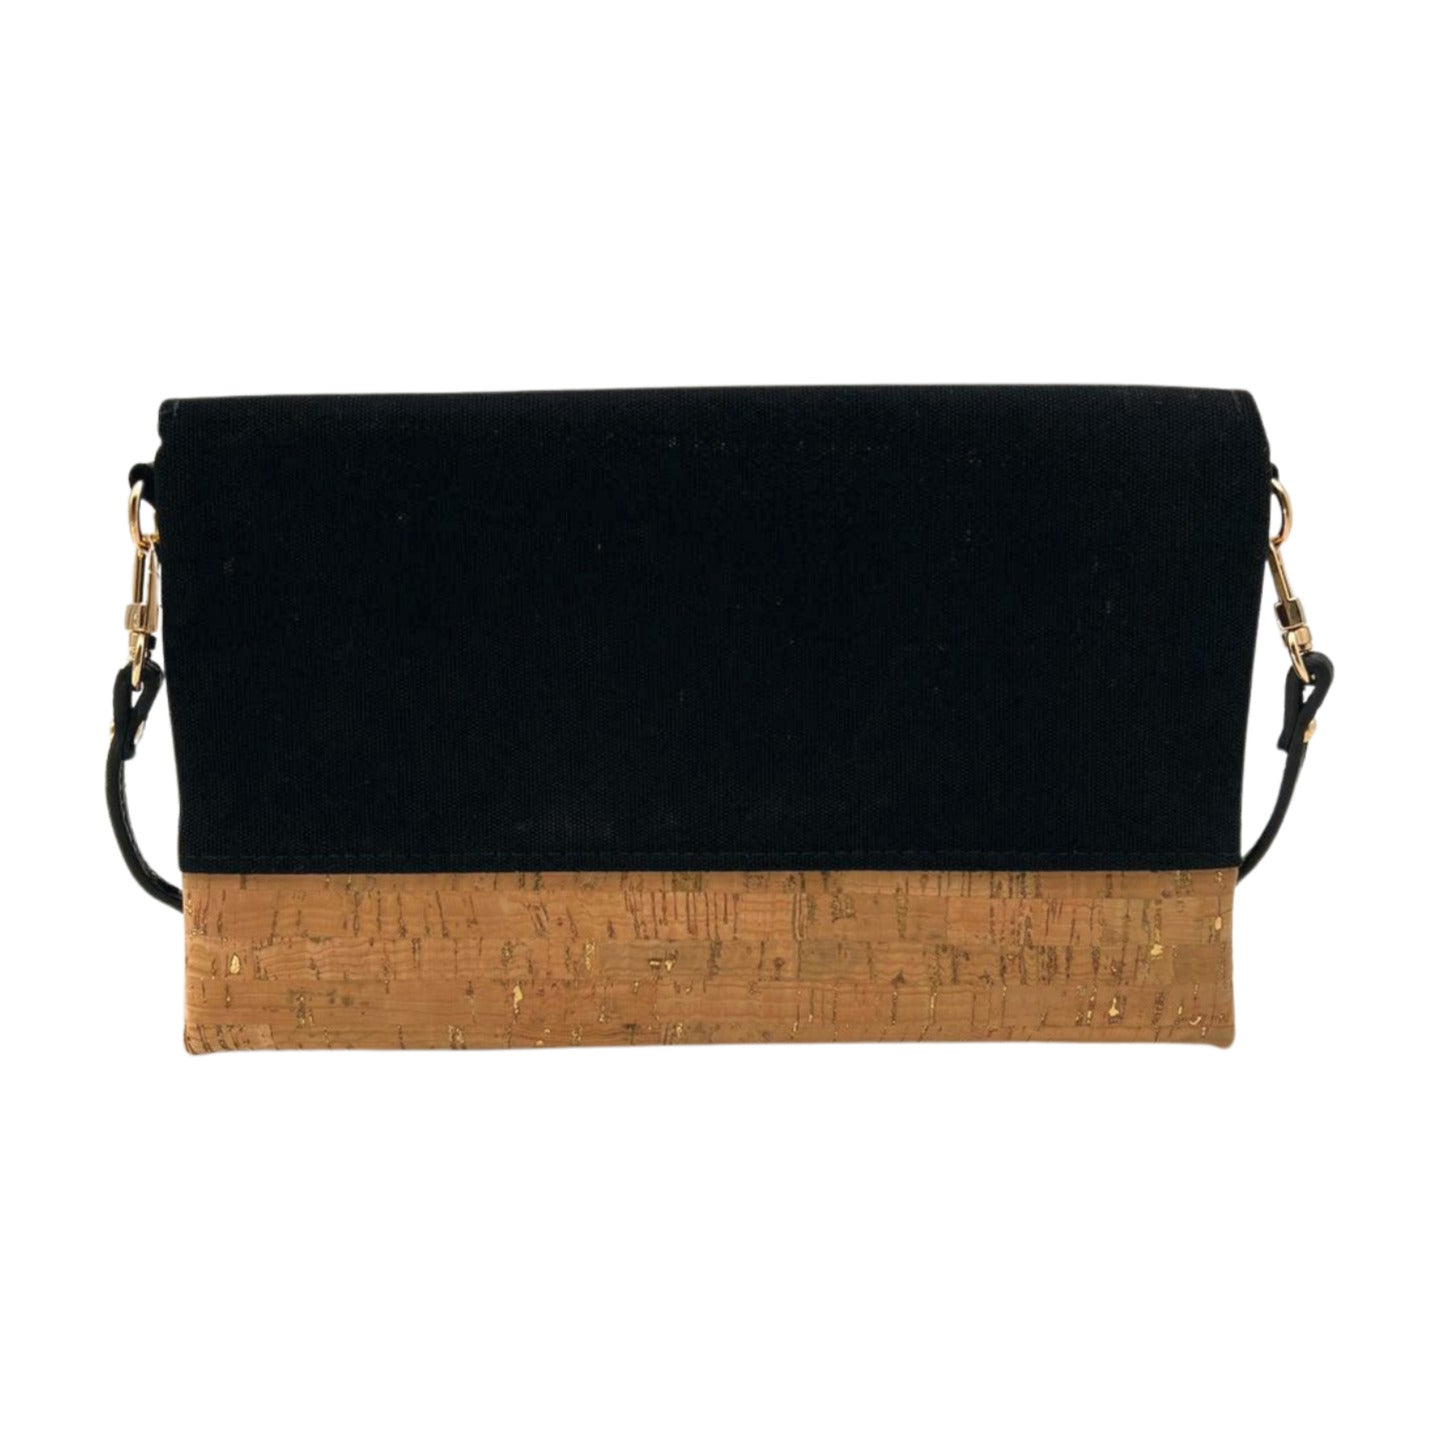 Pop-Up Mākeke - A Maui Day Original Handbags - Handprinted Fold-Over Handbag - Gold Quilt on Black Canvas - Back View